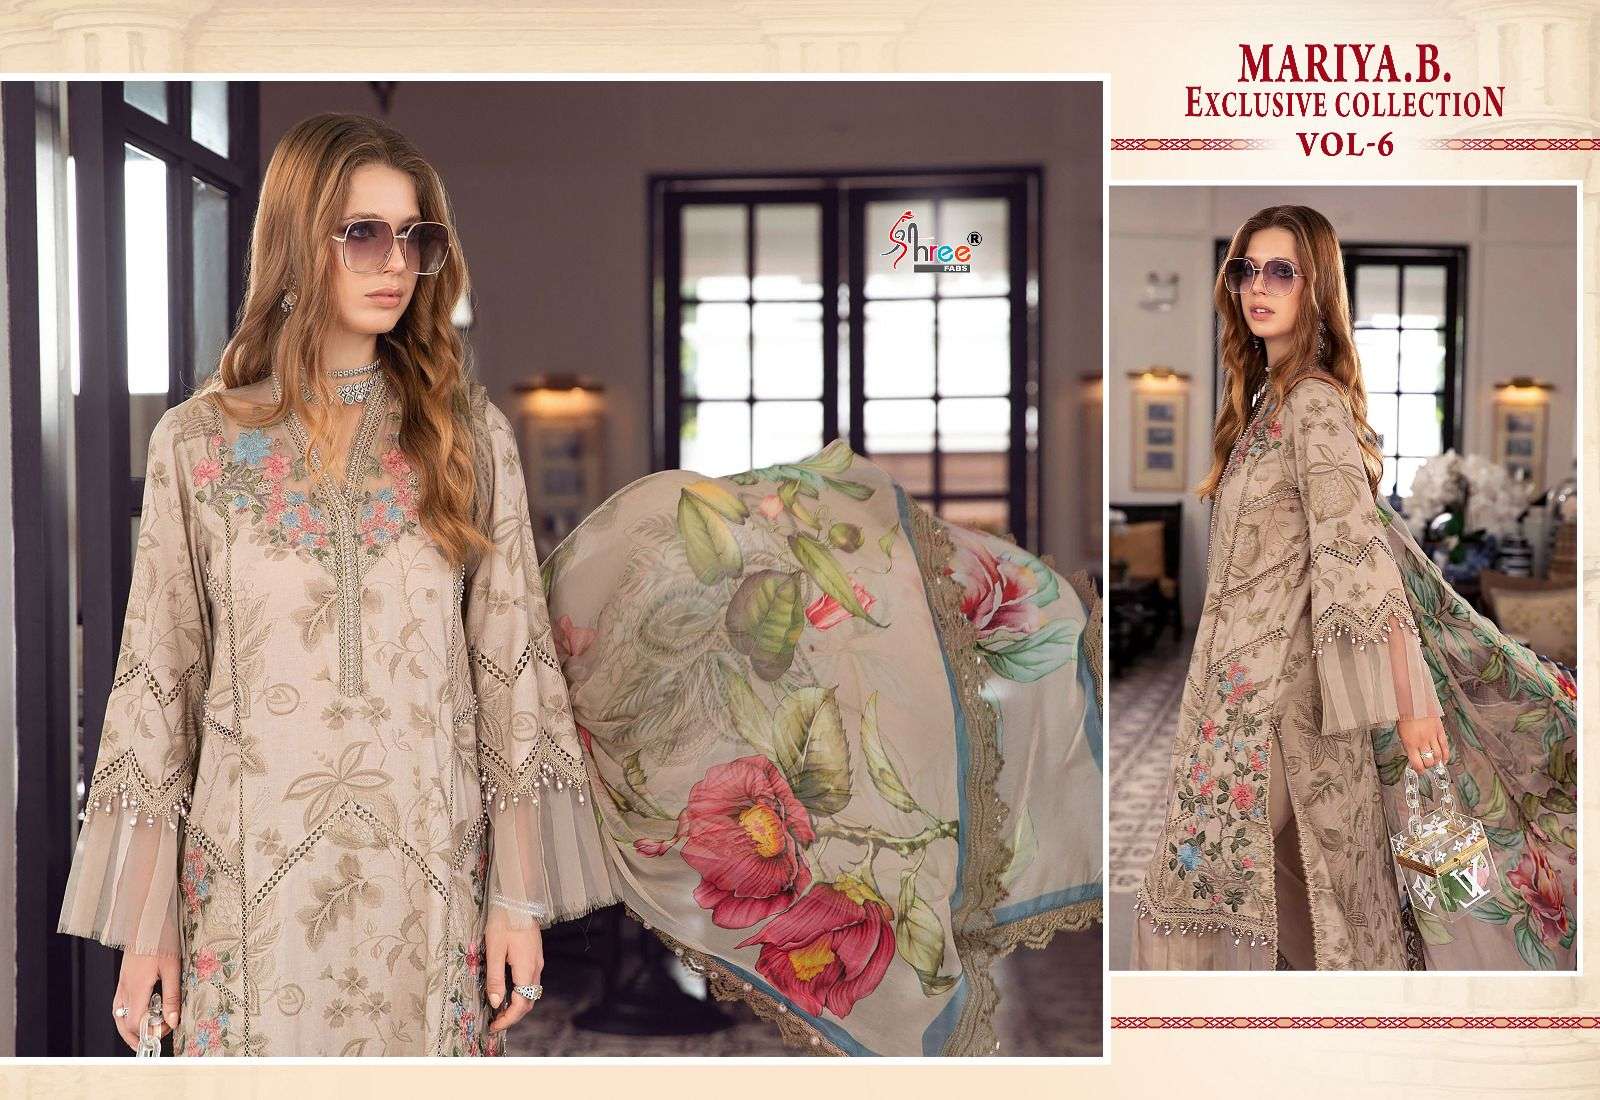 shree fabs maria b exclusive collection vol-6 3298-3305 series designer cotton dupatta wedding wear pakistani suit wholesaler surat gujarat